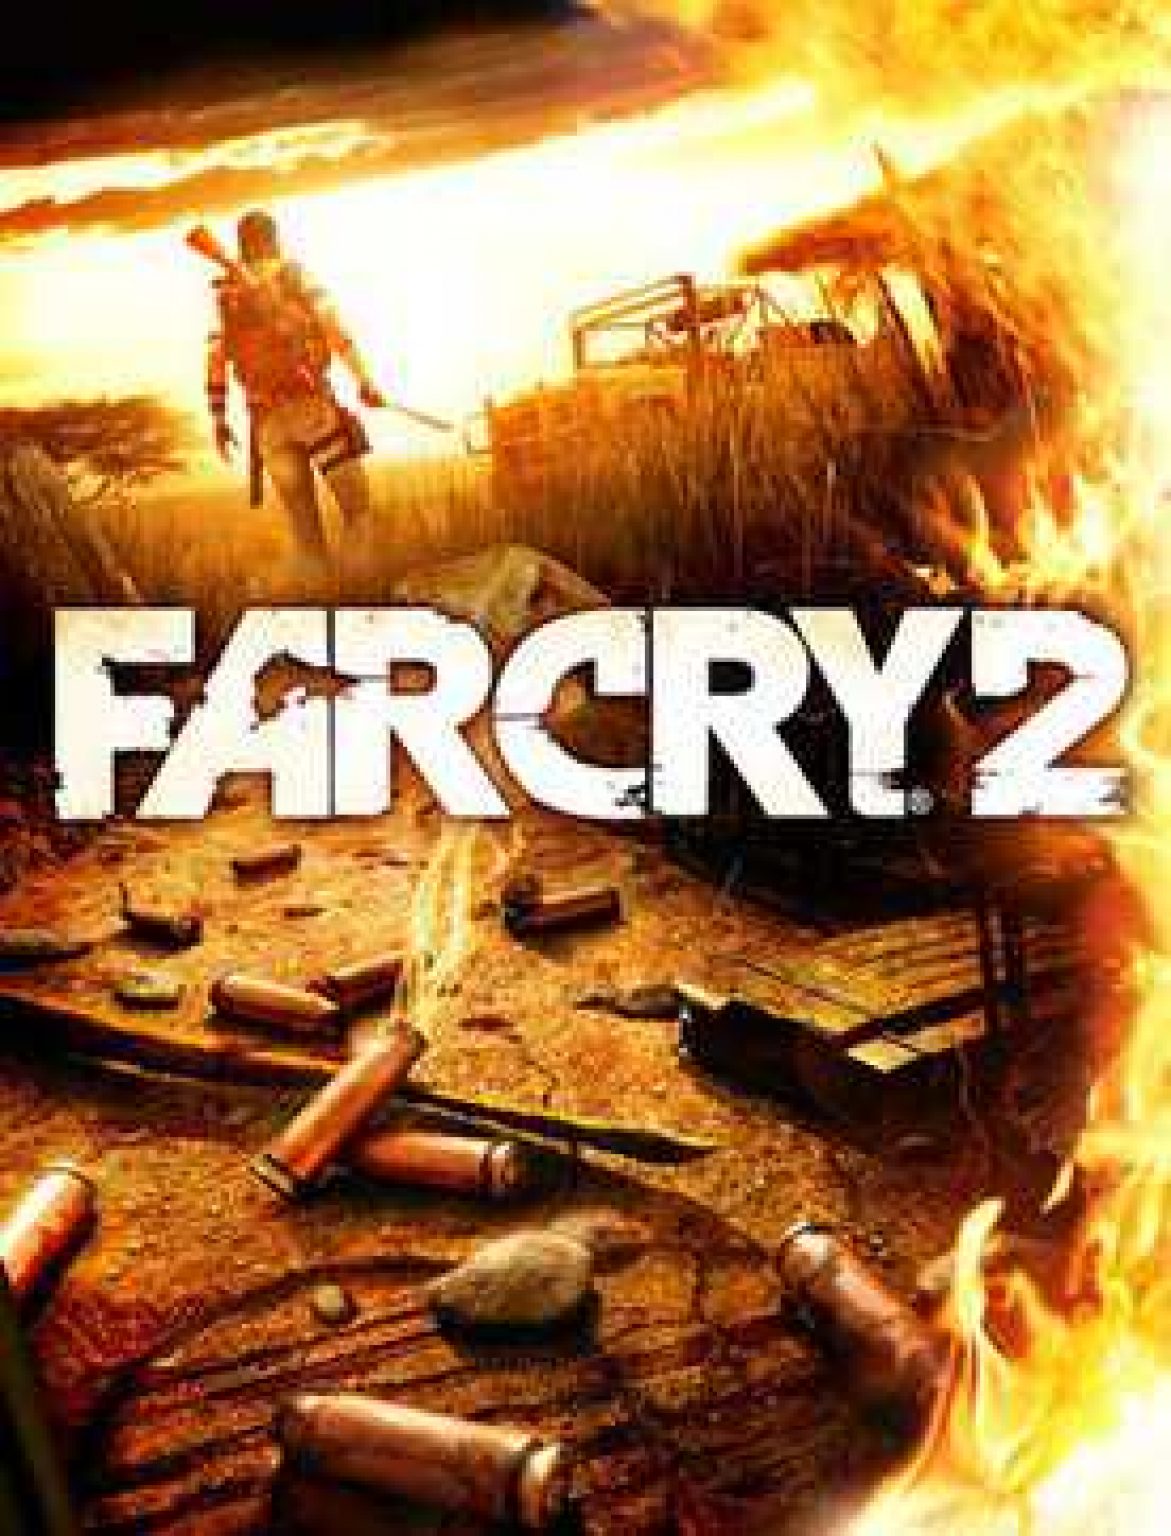 far cry 2 free download full version pc windows 10